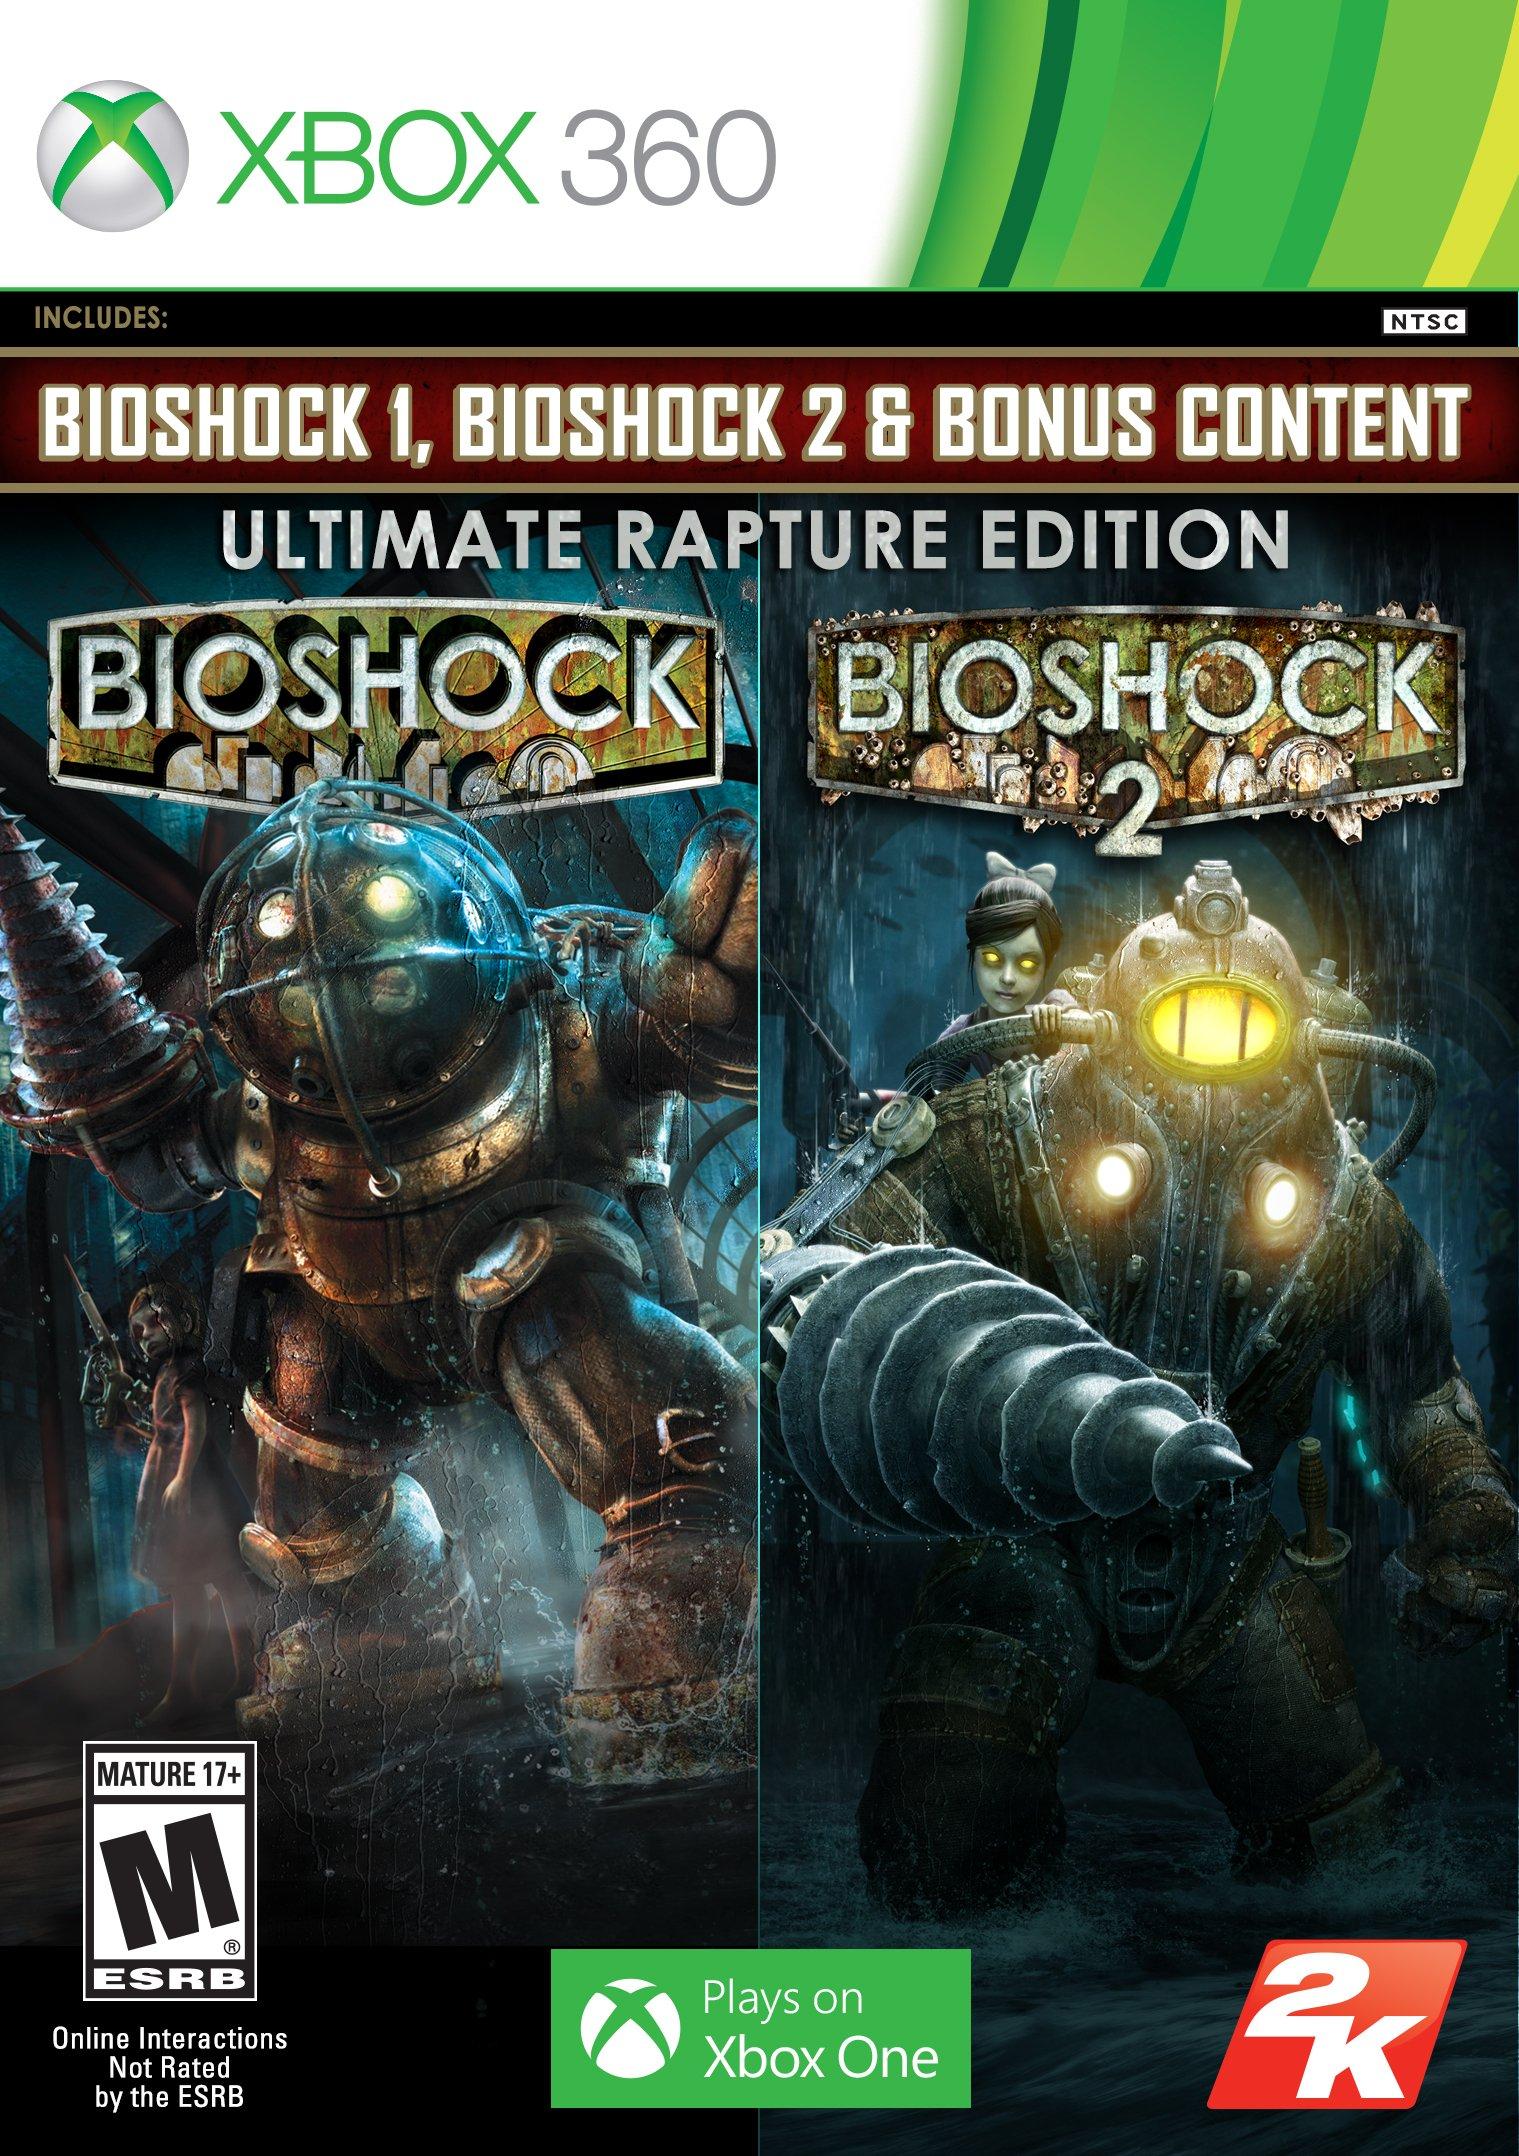 bioshock infinite xbox one